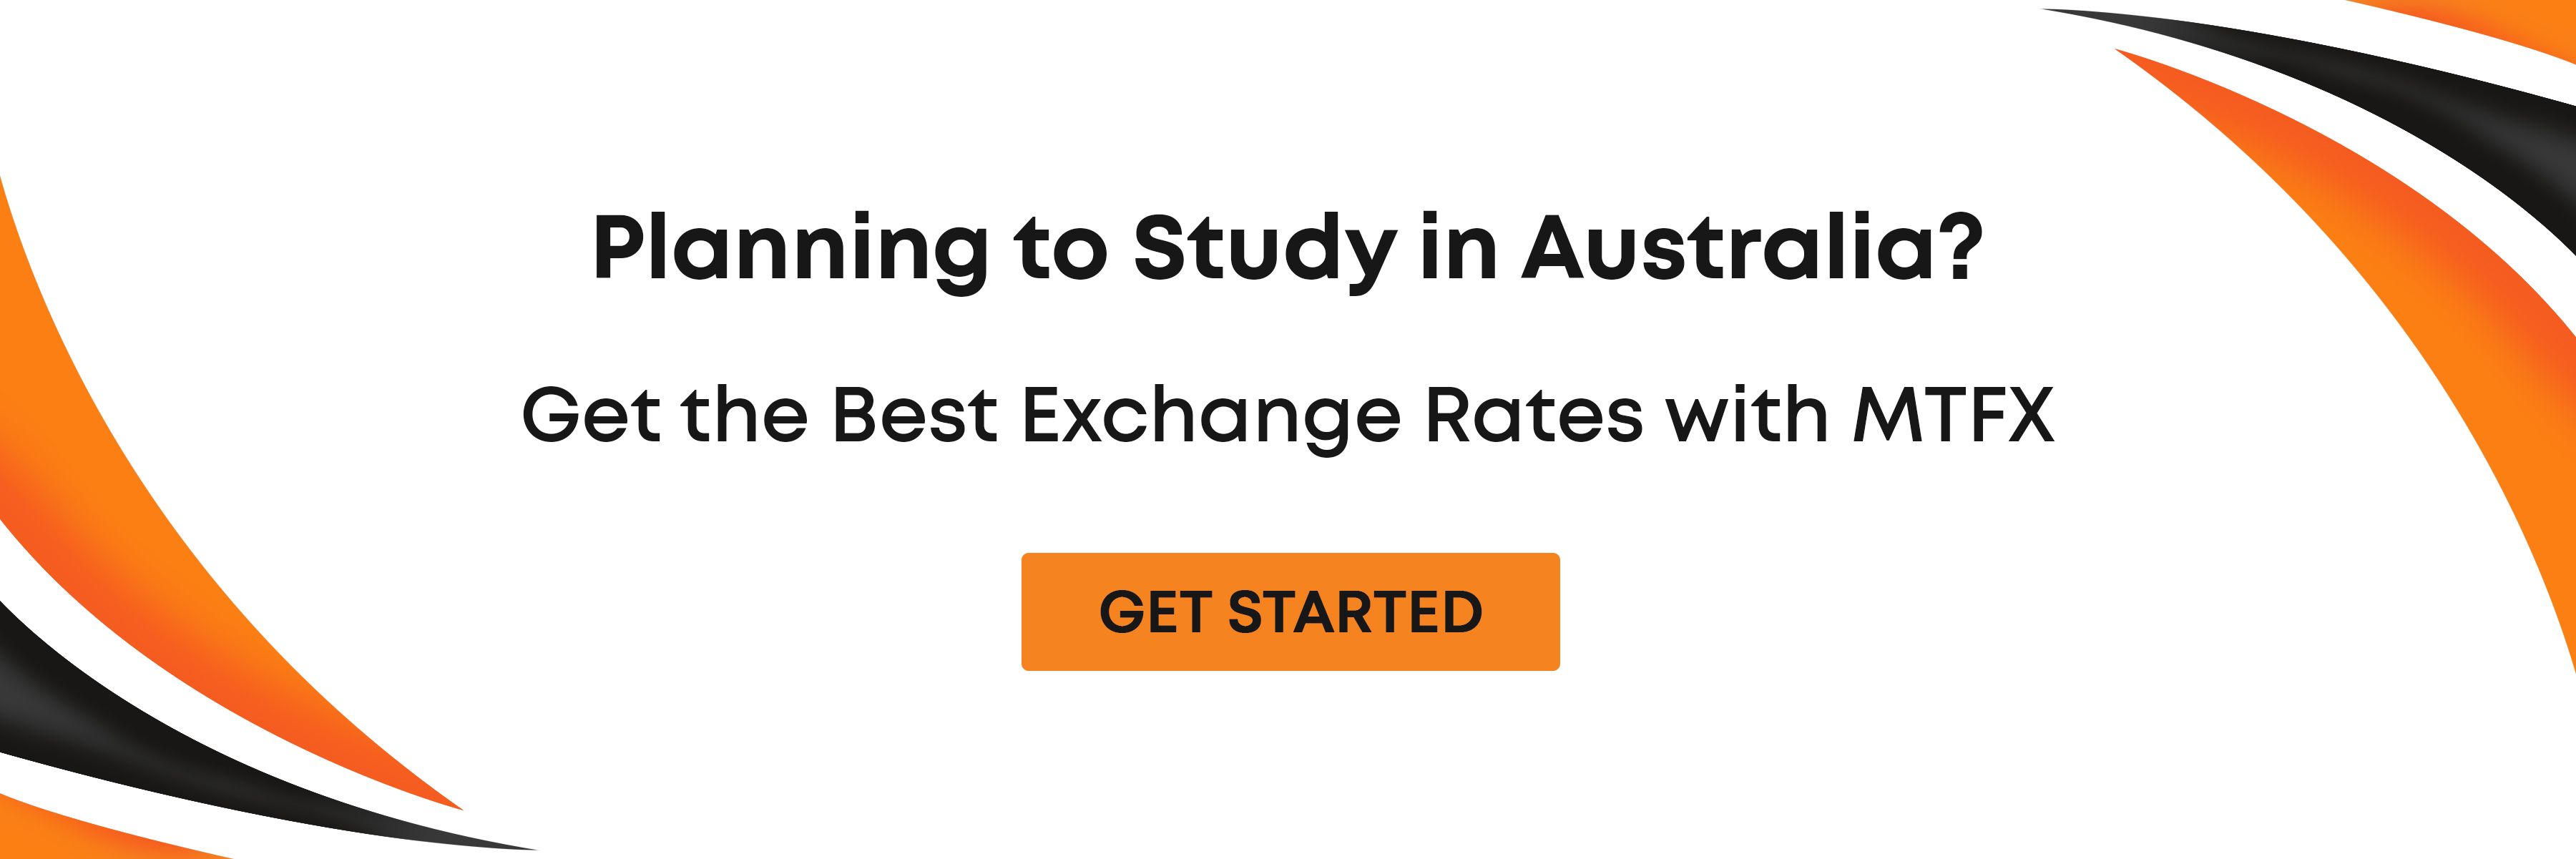 Planning to study in Australia?